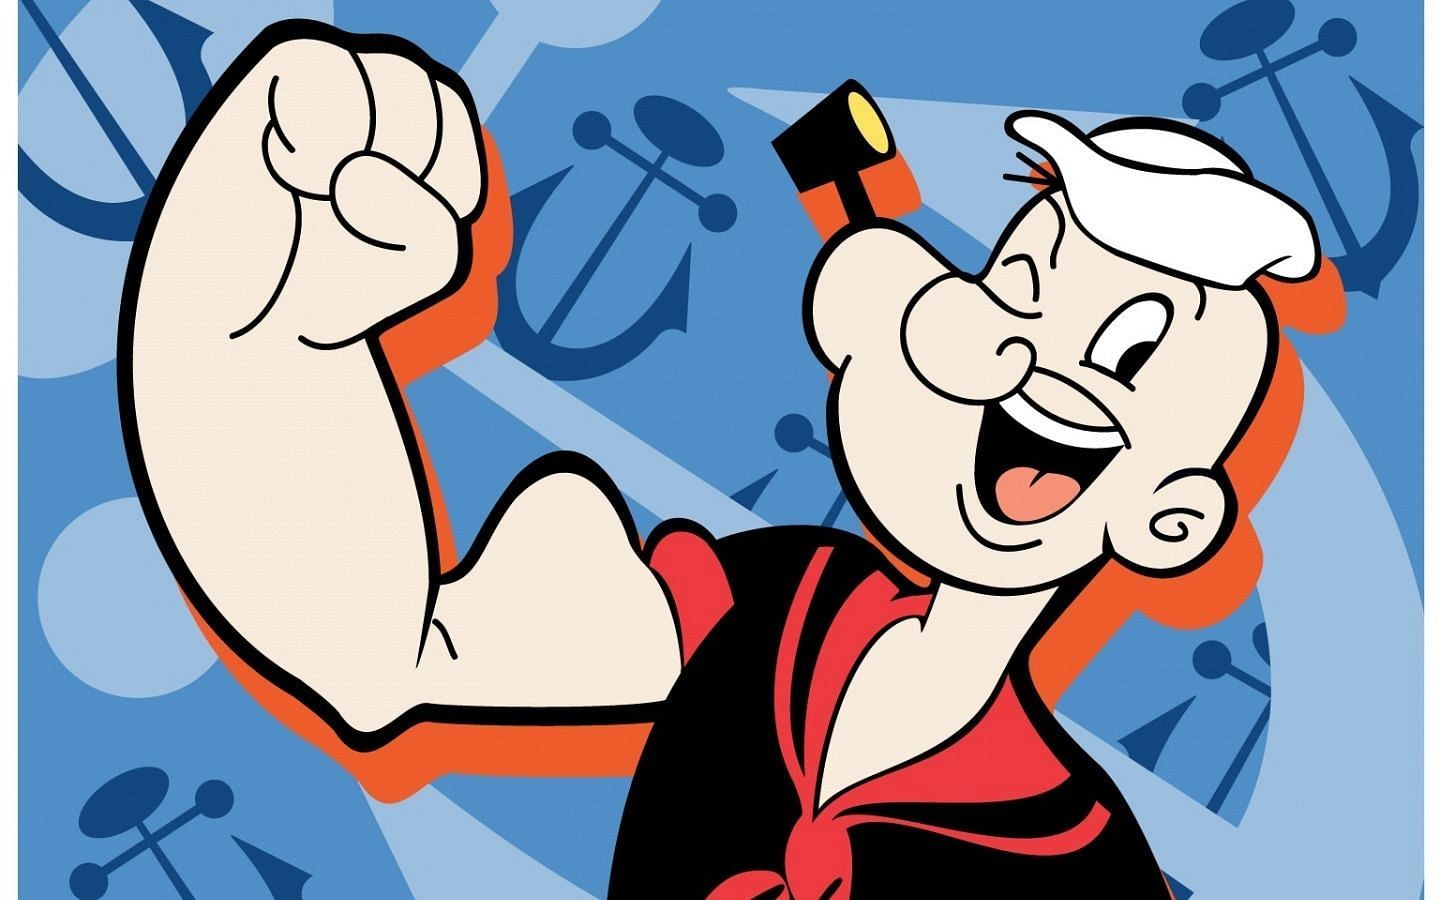 Get massive forearms like Popeye with a few exercises. (Image via wallpapersafari.com)